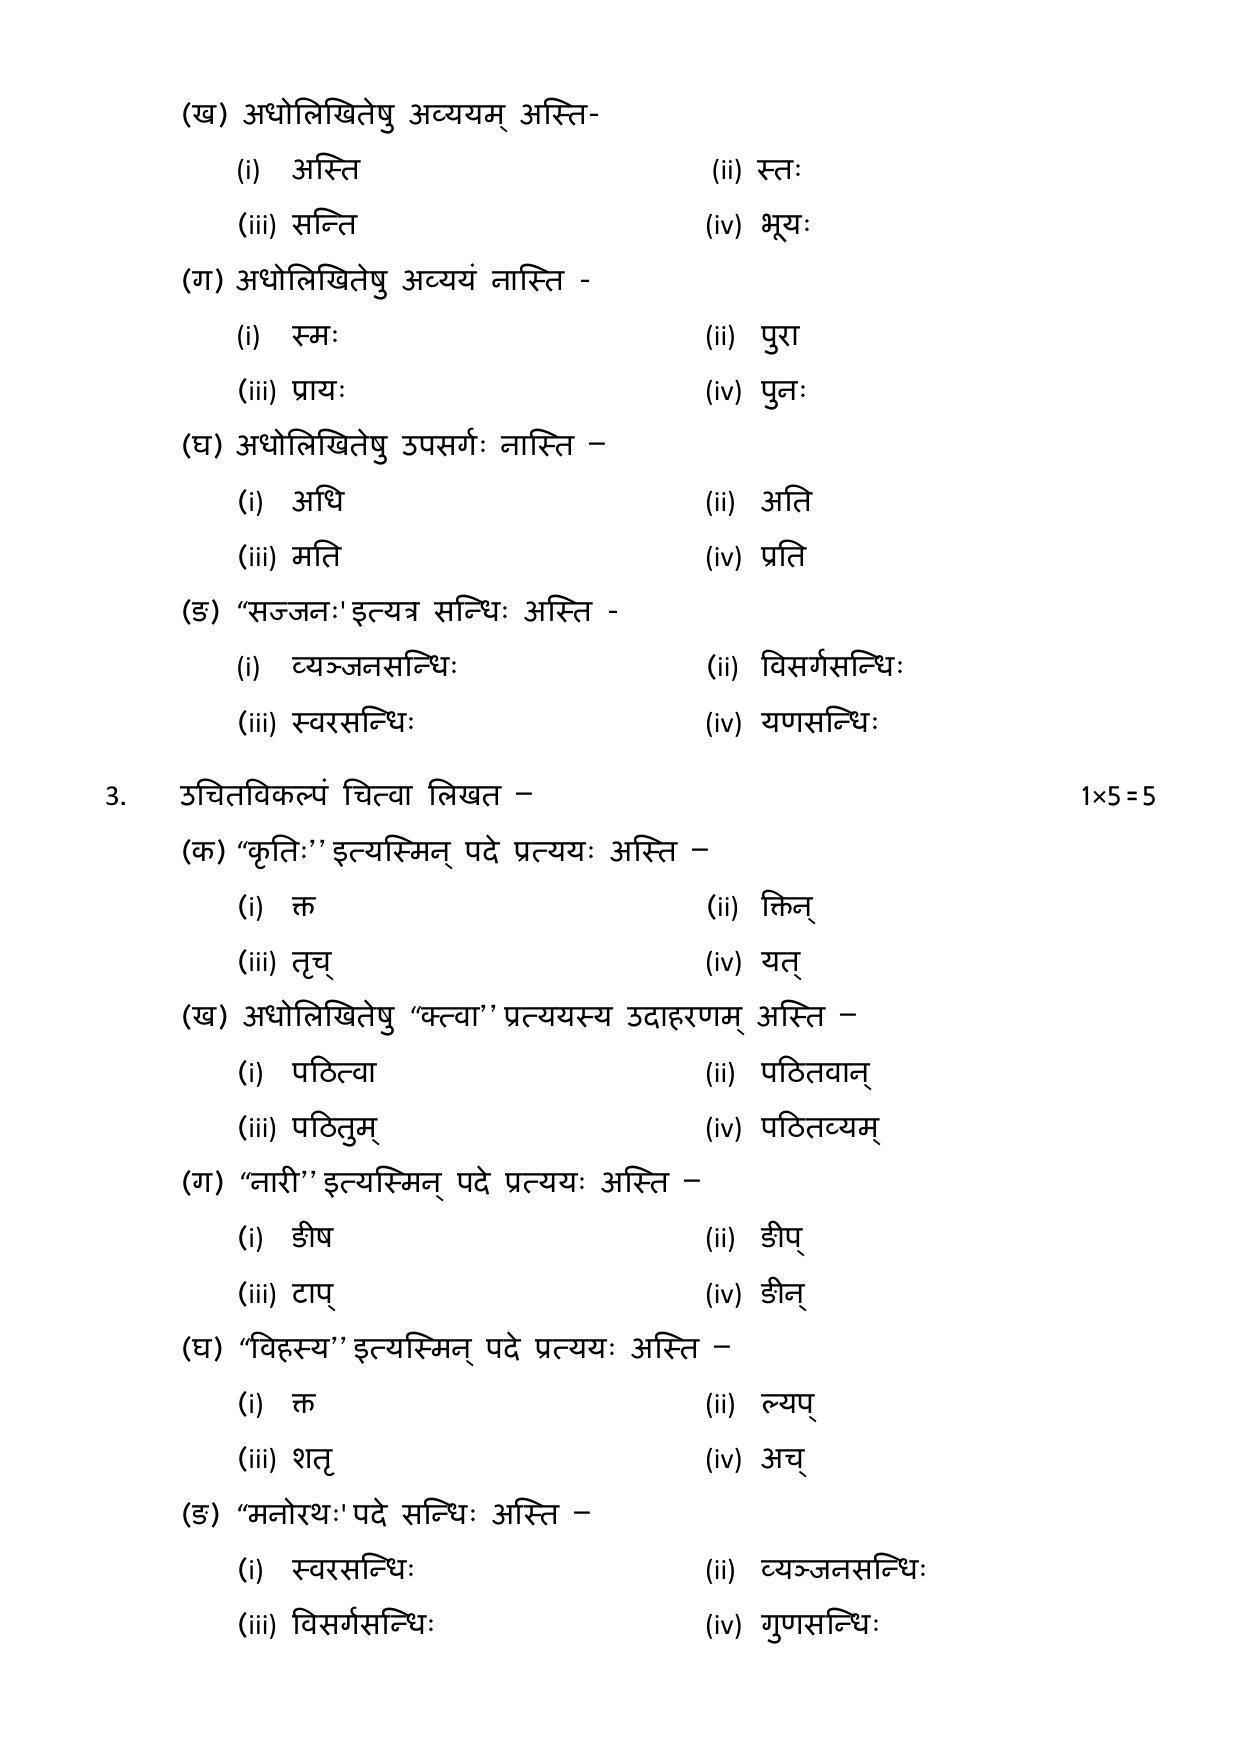 MP Board Class 12 Sanskrit 2019 Question Paper - Page 2